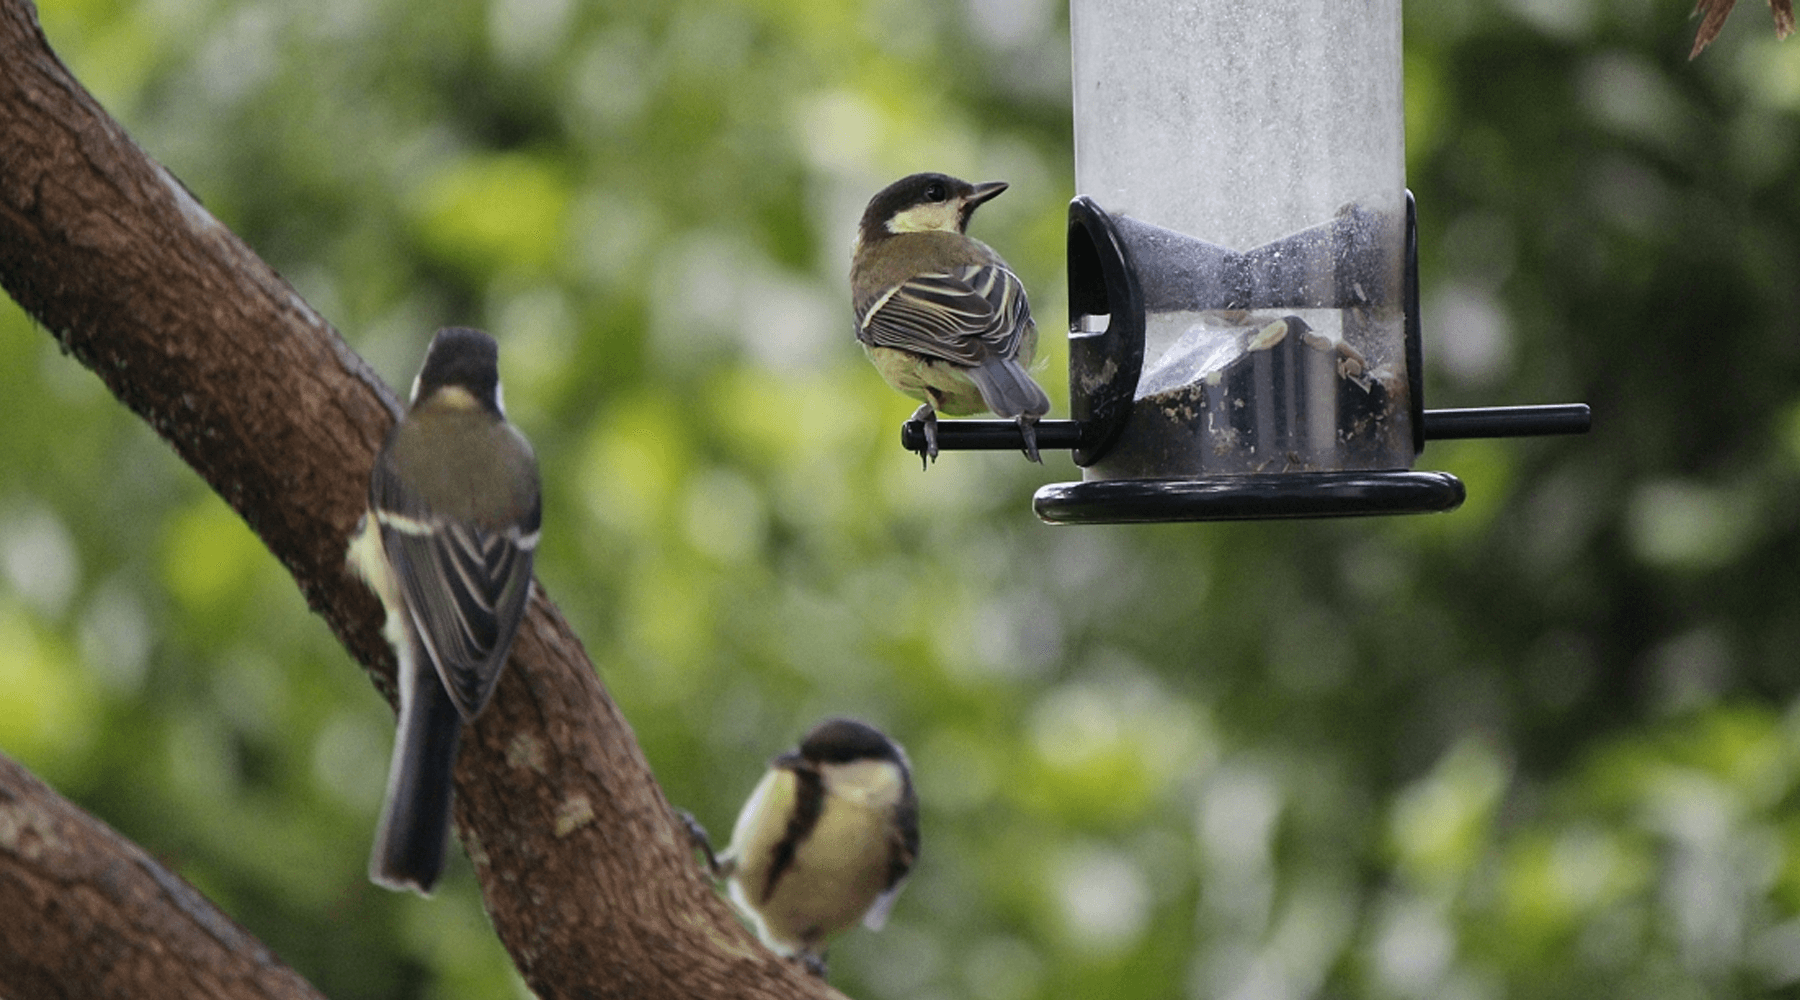 Tips for feeding the birds in your garden